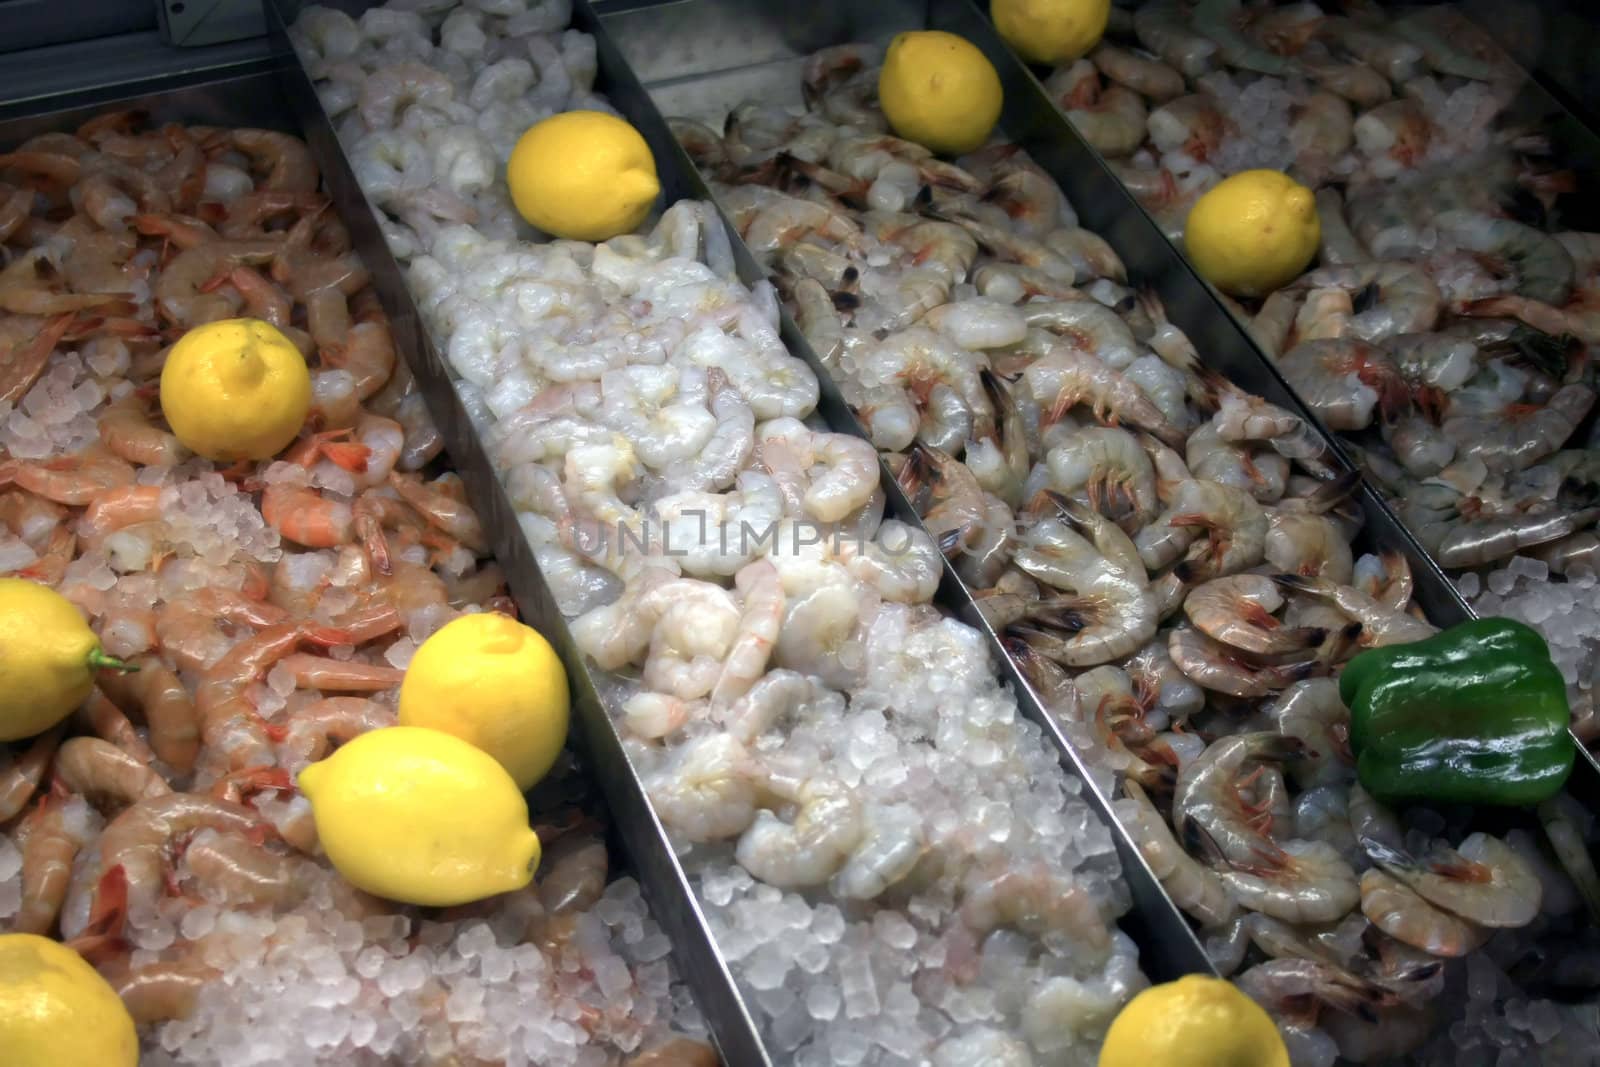 A display of shrimp at a fish market